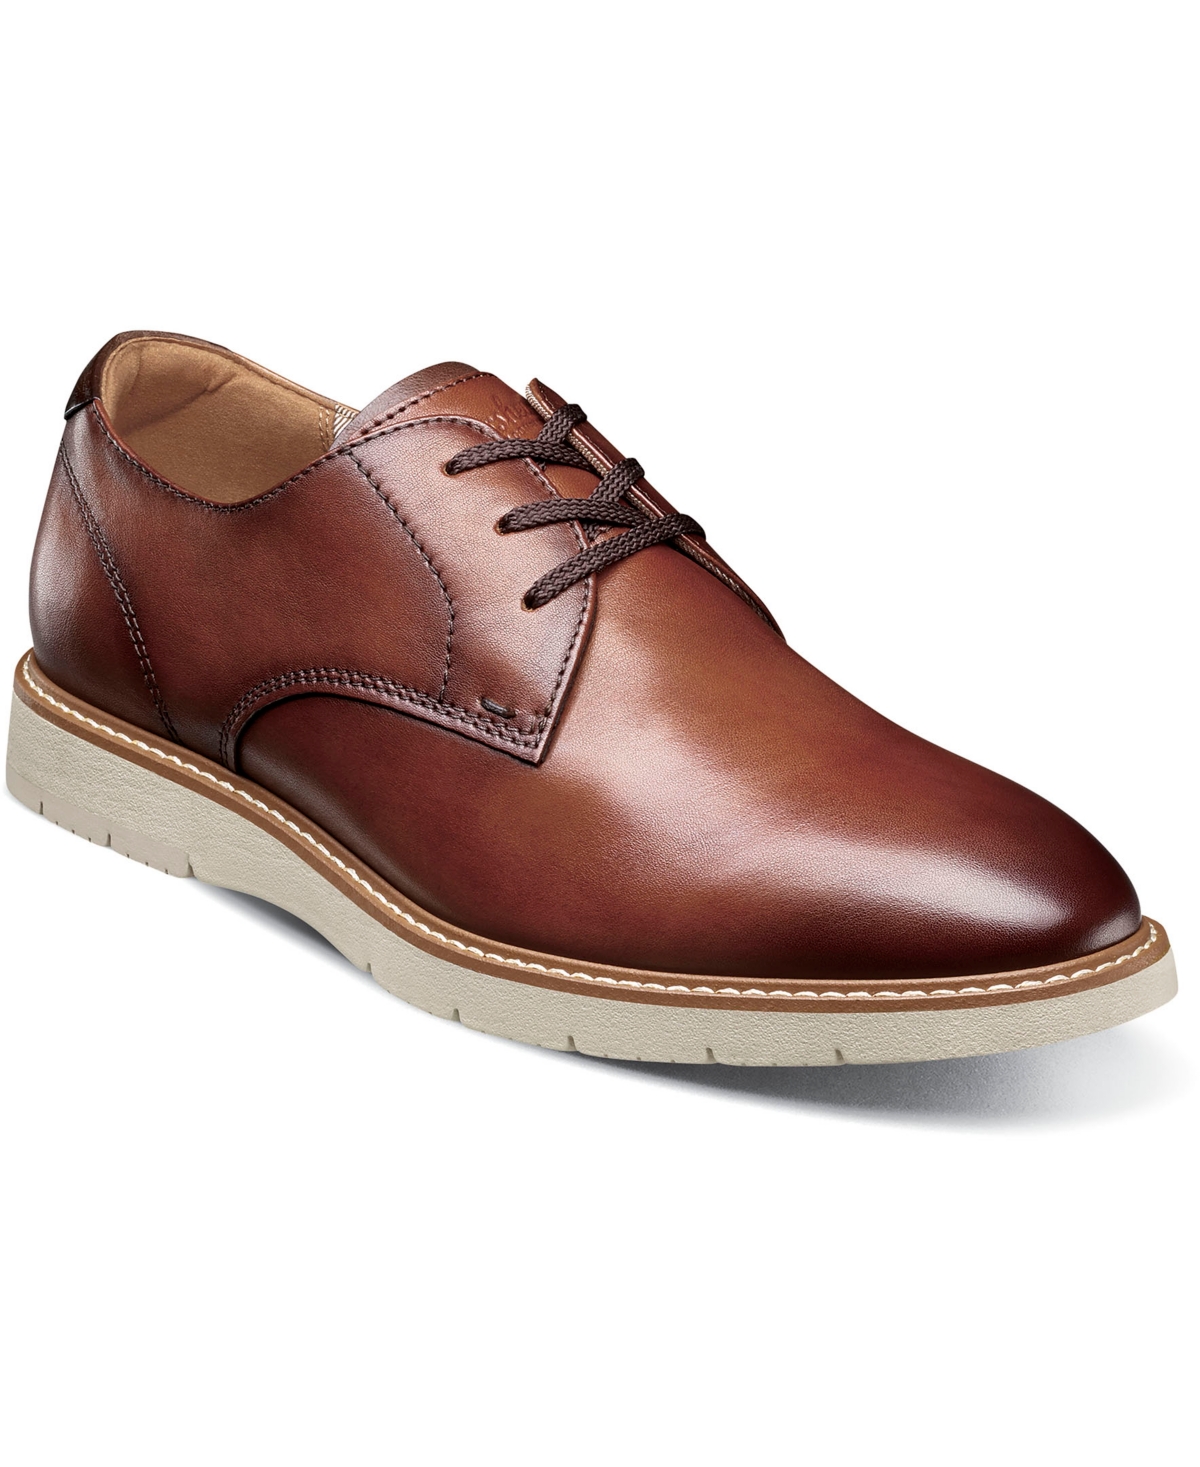 Men's Vibe Plain Toe Oxford Lace Up Dress Shoe - Cognac Multi